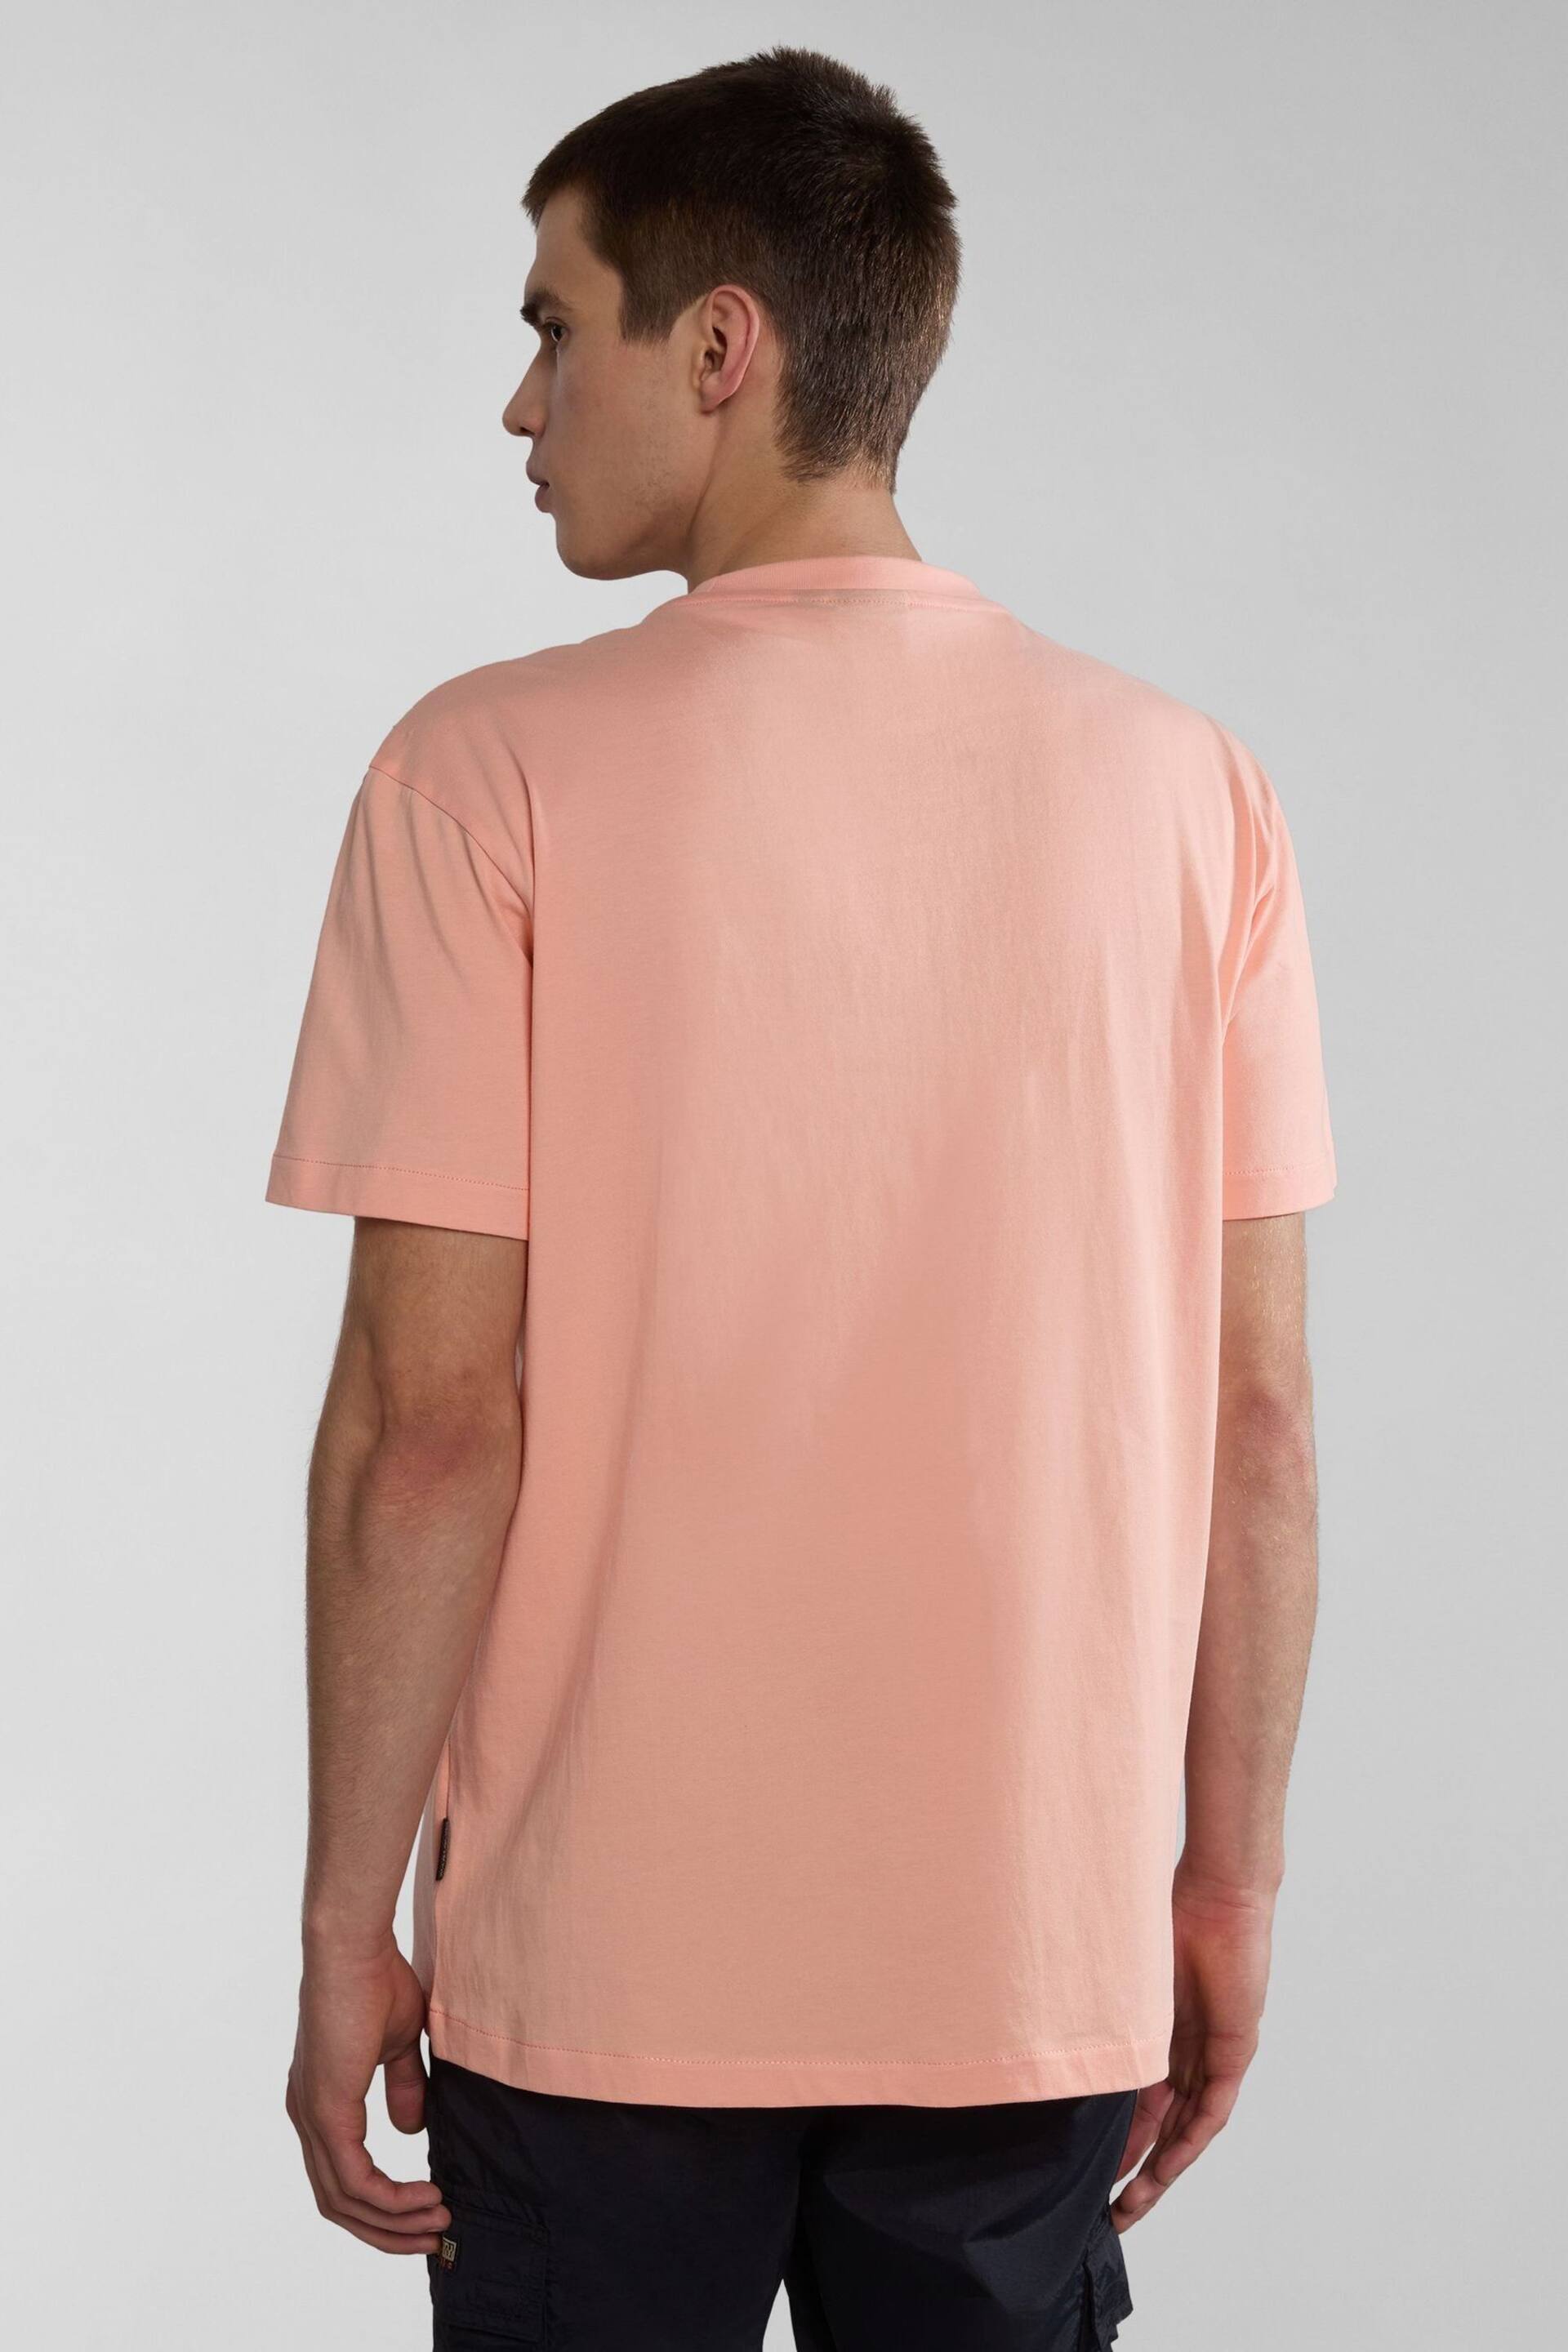 Napapijri Box Logo Pink Short Sleeve T-Shirt - Image 3 of 7